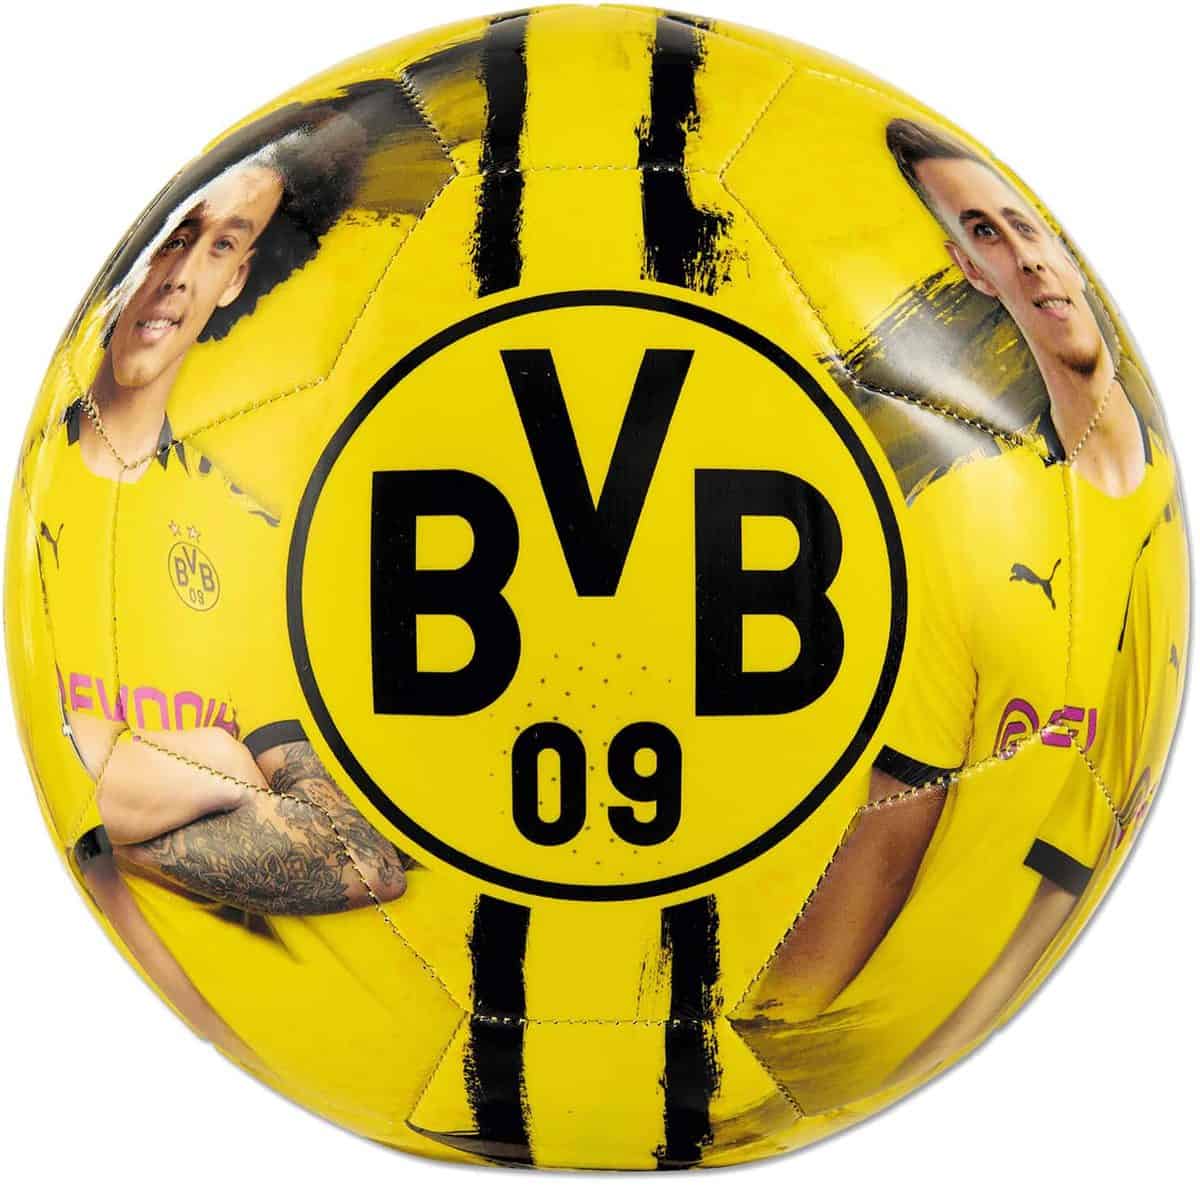 ORIGINAL BVB-Spielerball 19/20 Borussia Dortmund 